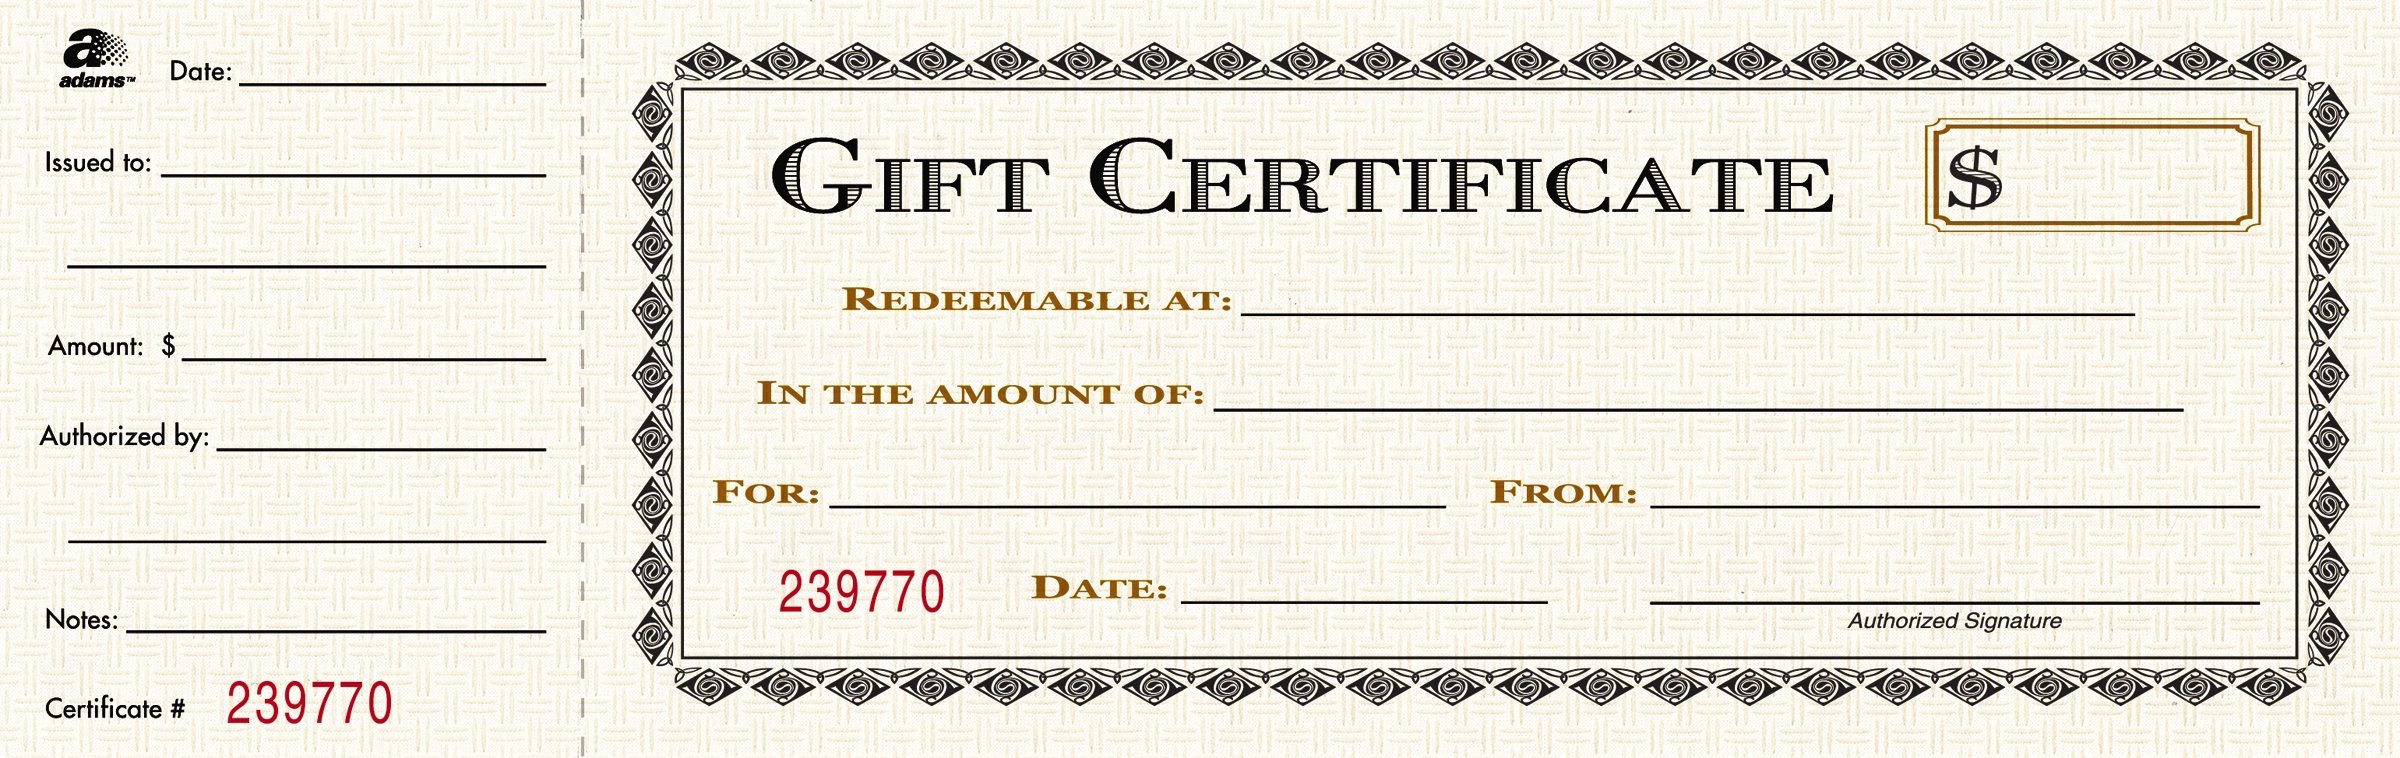 Gftlz Gift Certificate Template Elegant Amazon Best Paper Greetings 50 Sheet Gift Certificate